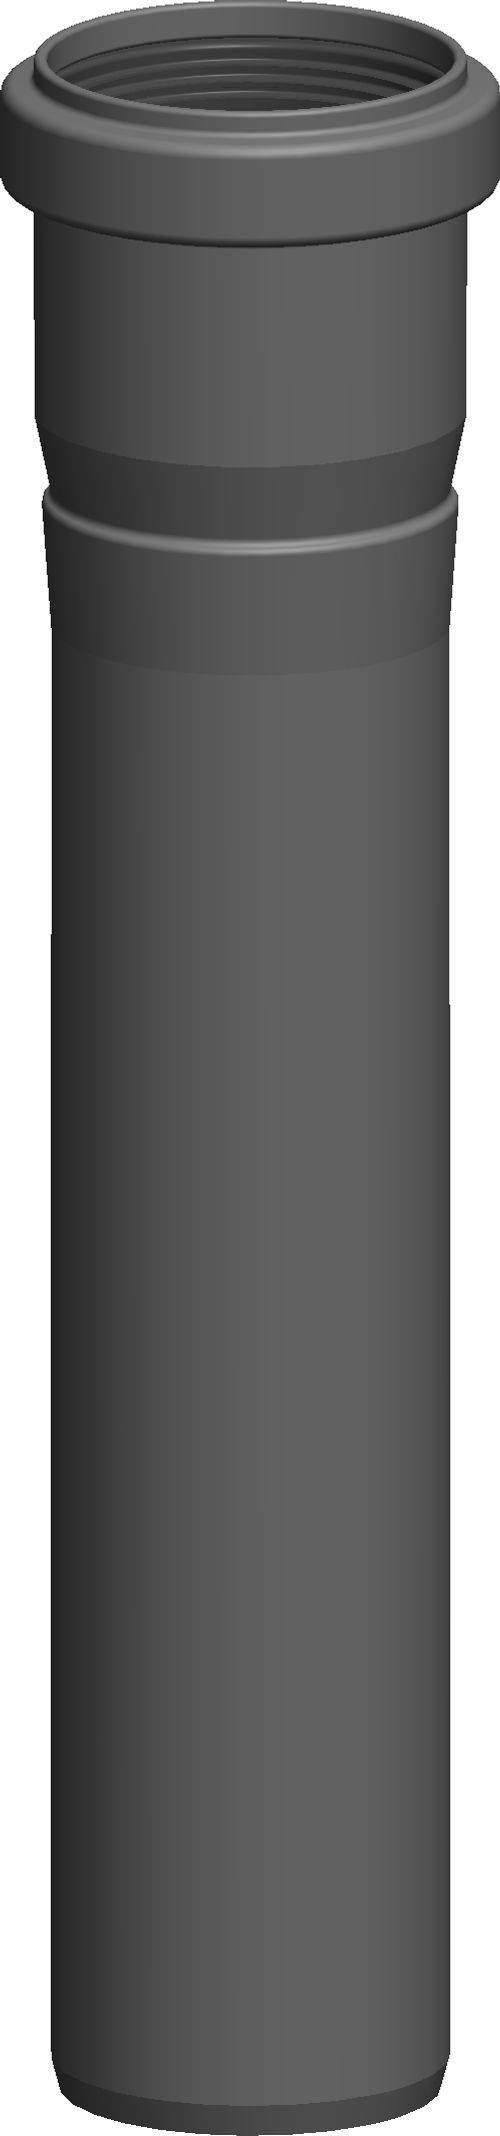 ATEC-Rohr-1955mm-DN-60-kuerzbar-einwandig-0320